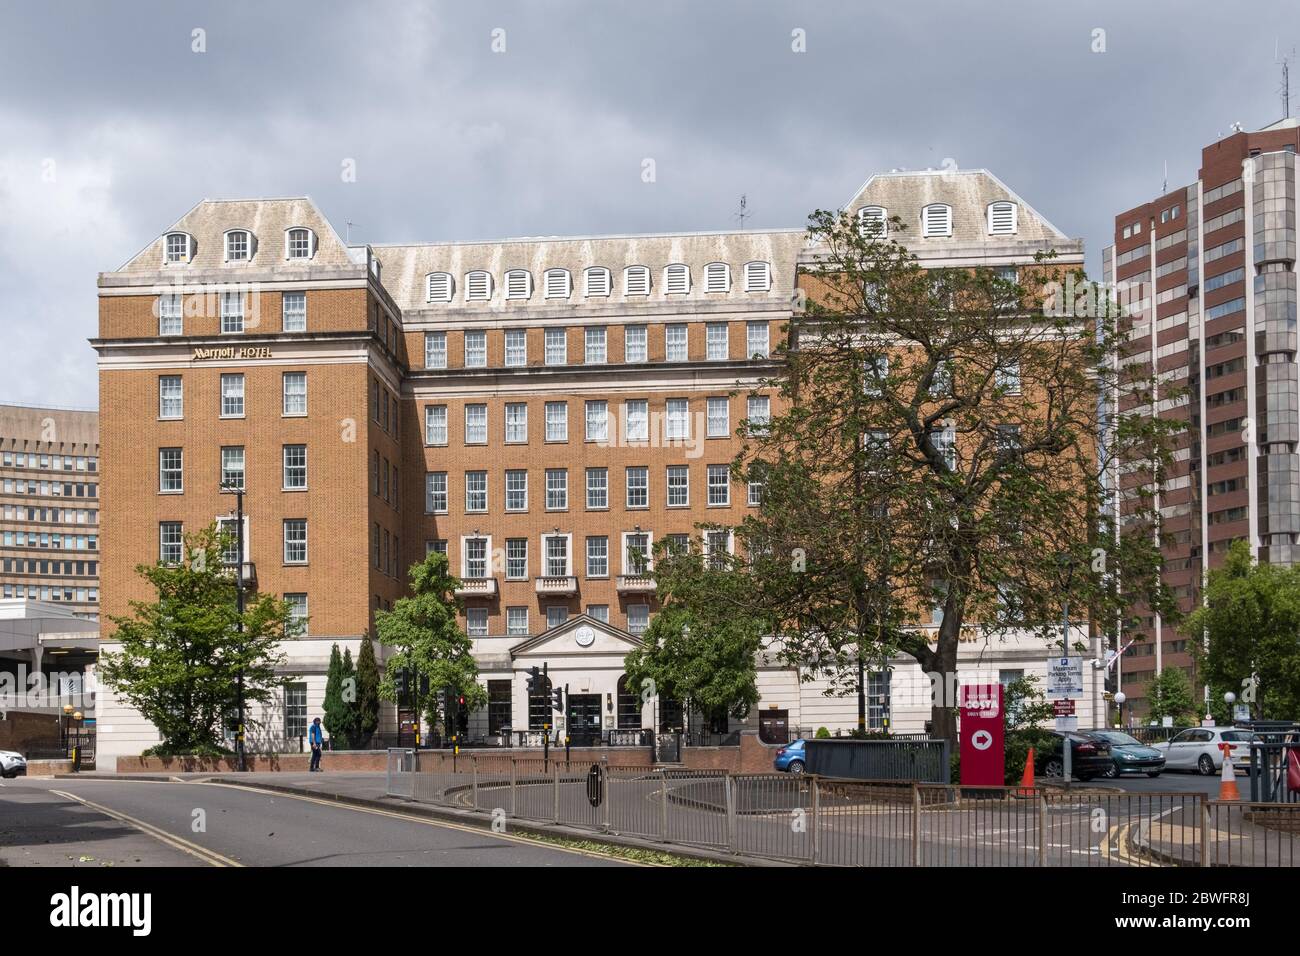 The Marriott Hotel at Five ways in Edgbaston, Birmingham,UK Stock Photo